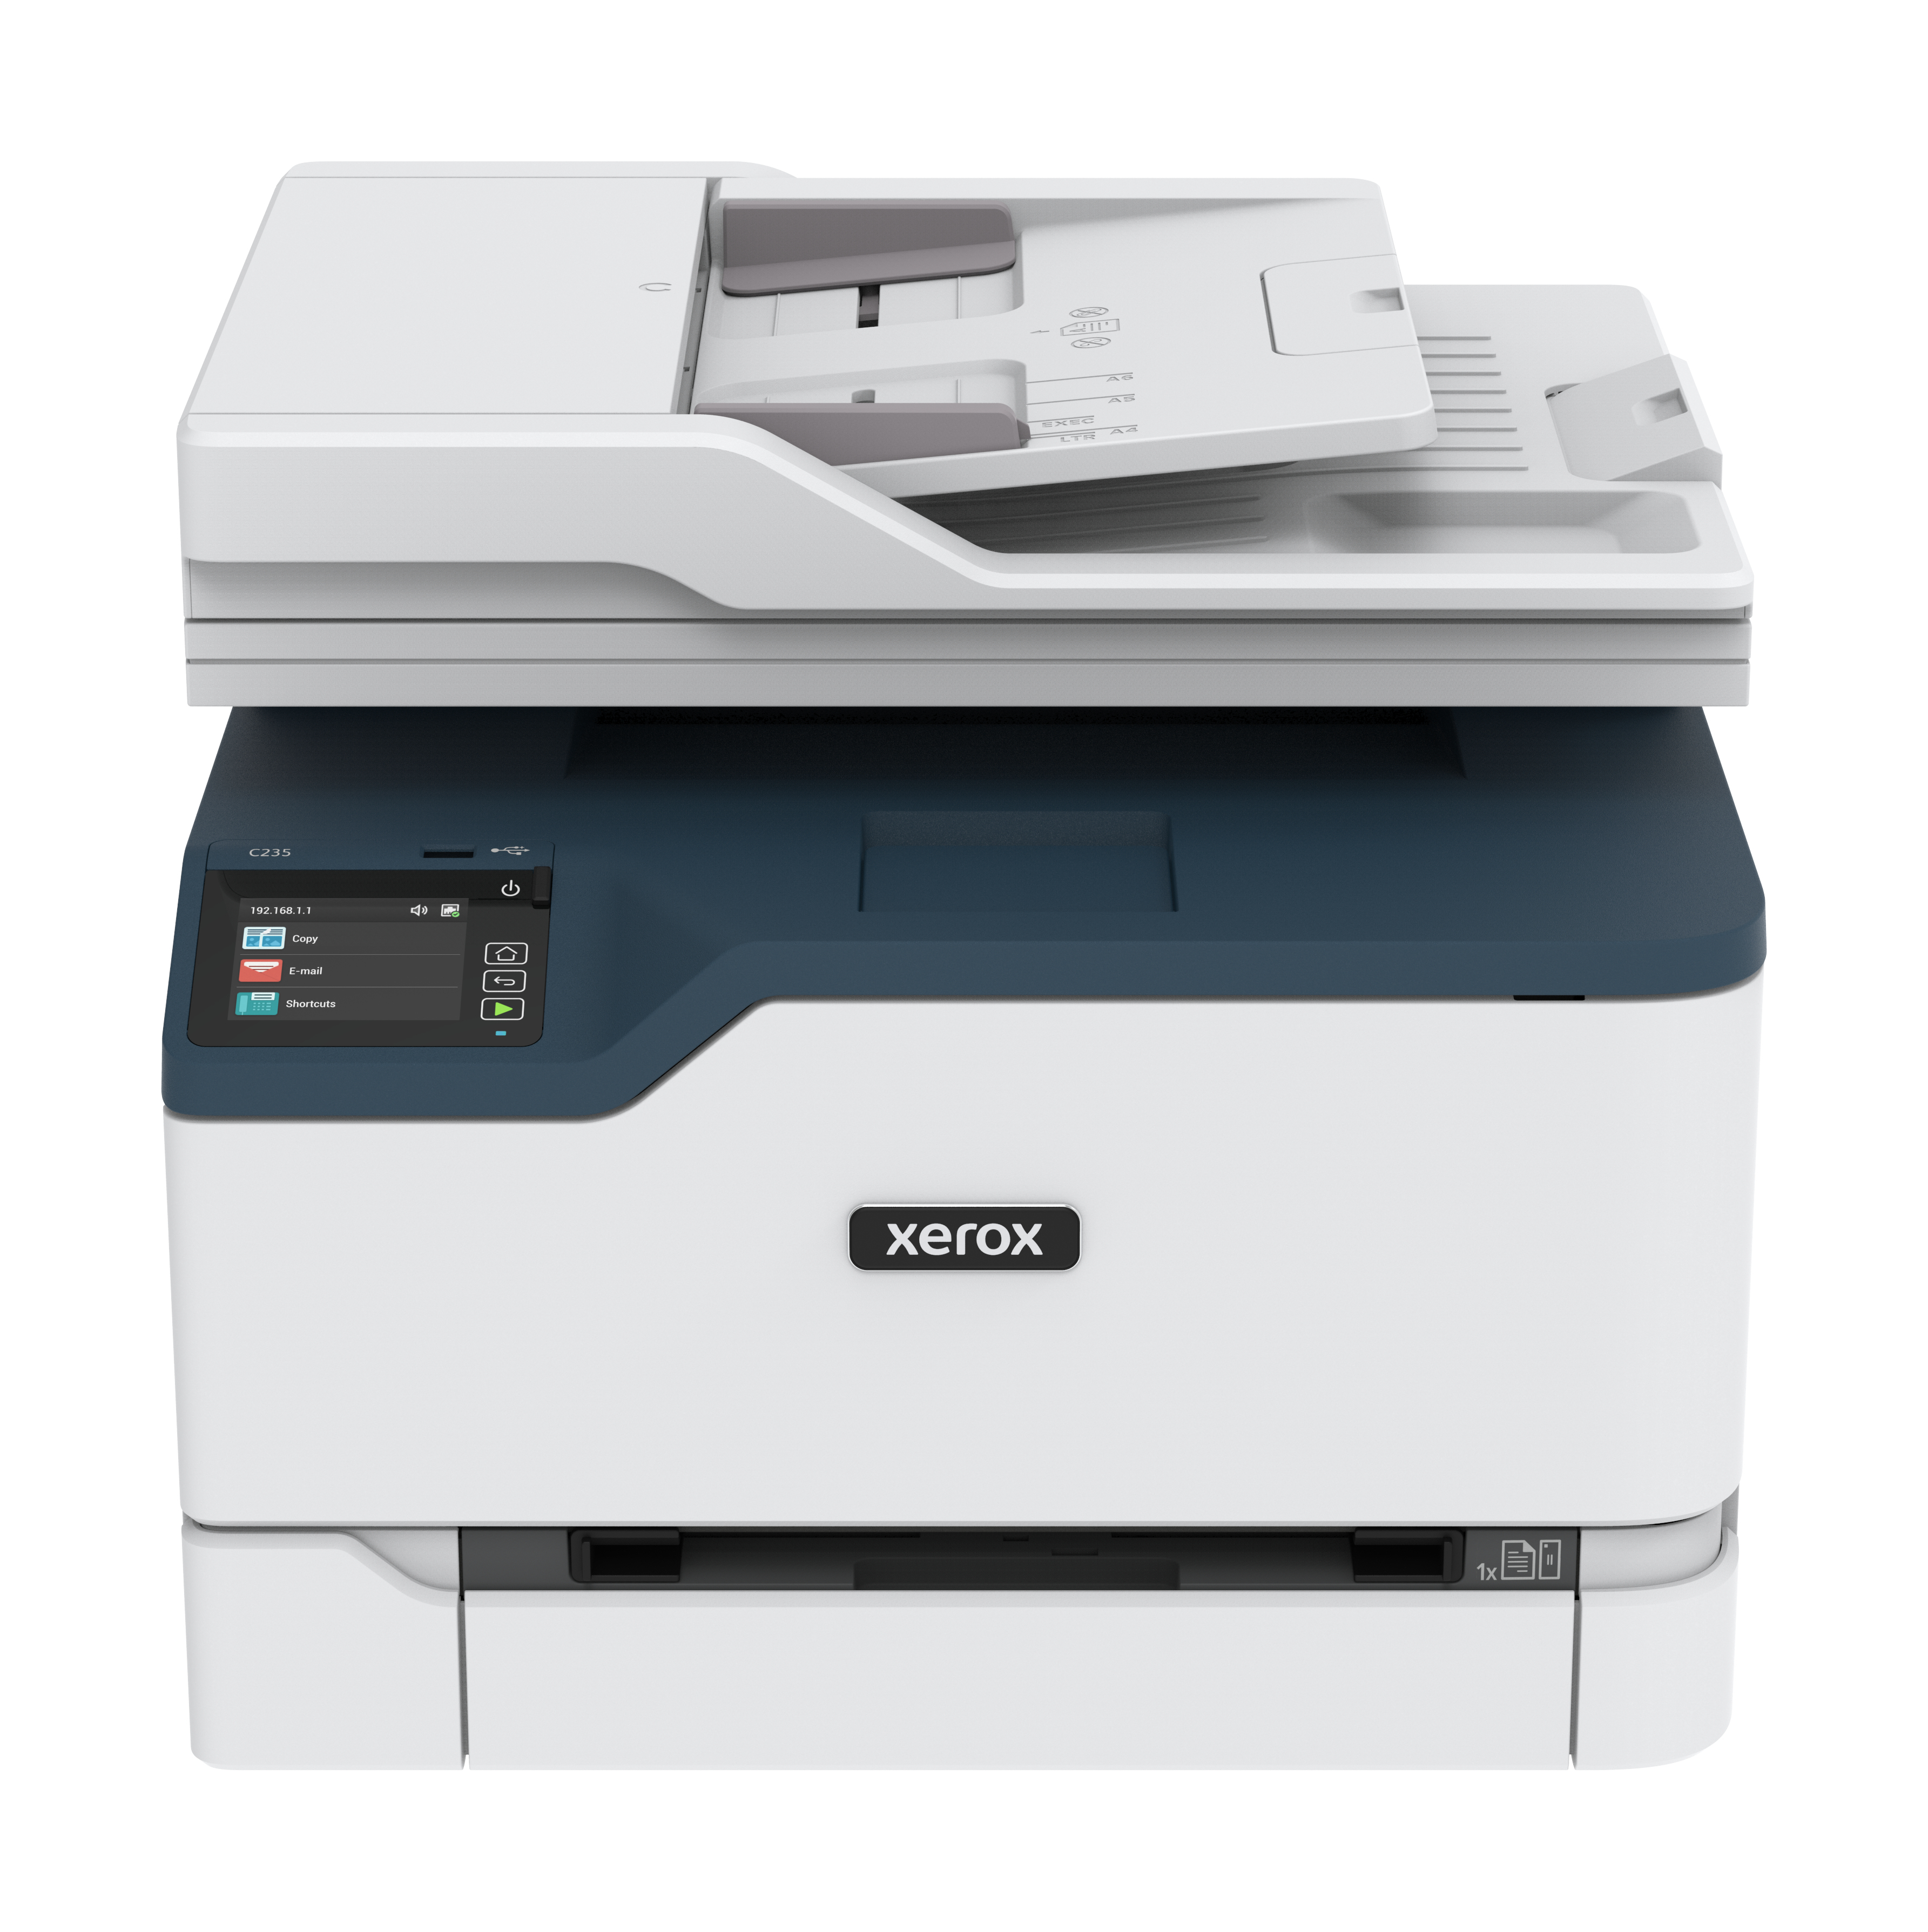 Xerox C235 A4 22 ppm trådlös kopiering/utskrift/scanning/fax PS3 PCL5e/6 ADF 2 magasin Totalt 251 ark